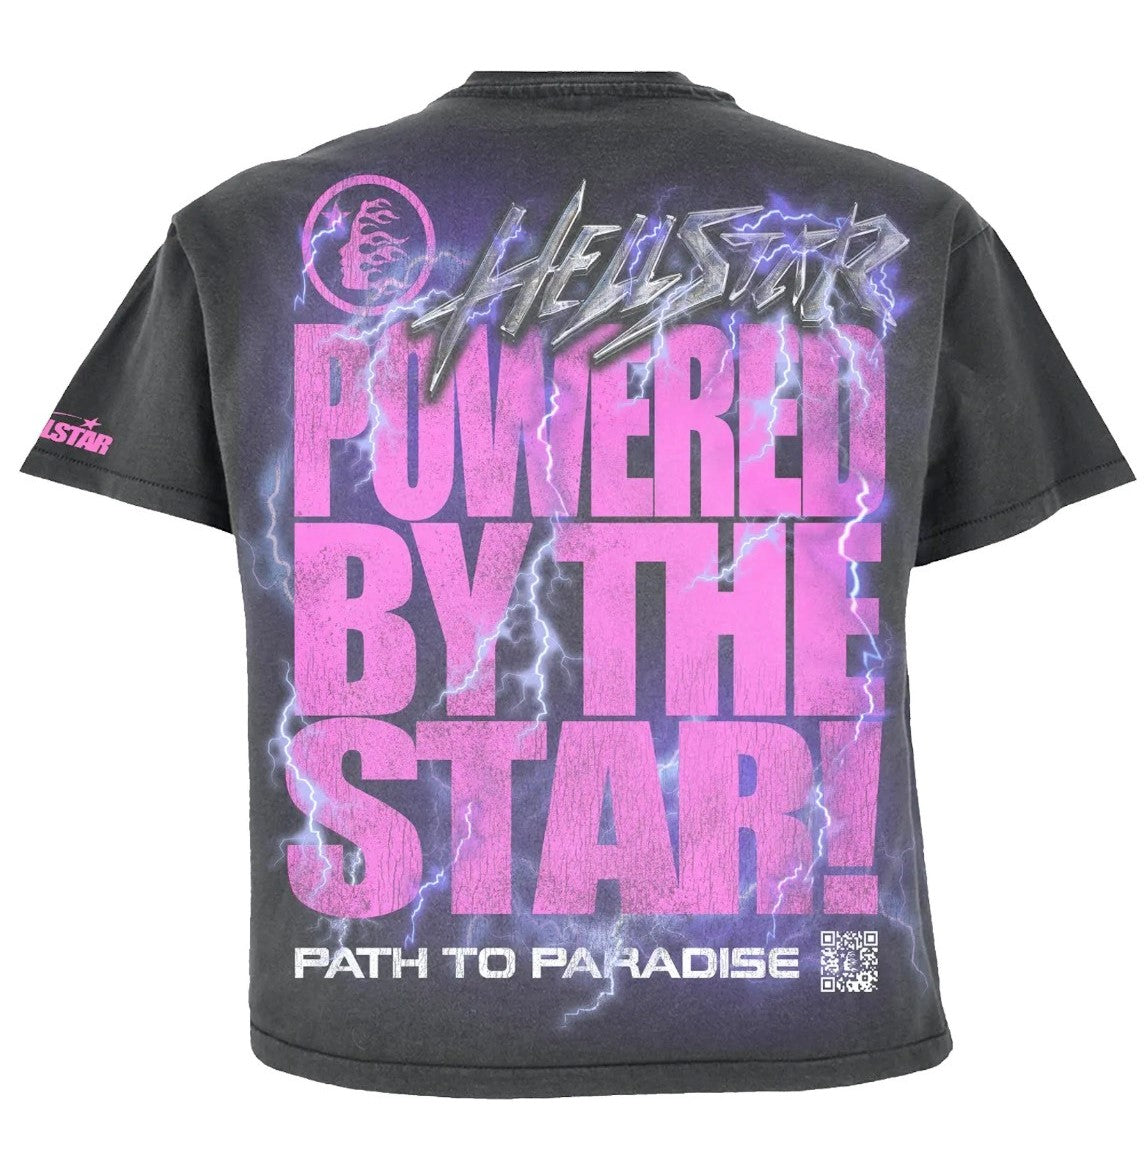 Hellstar Powered by The star Tee